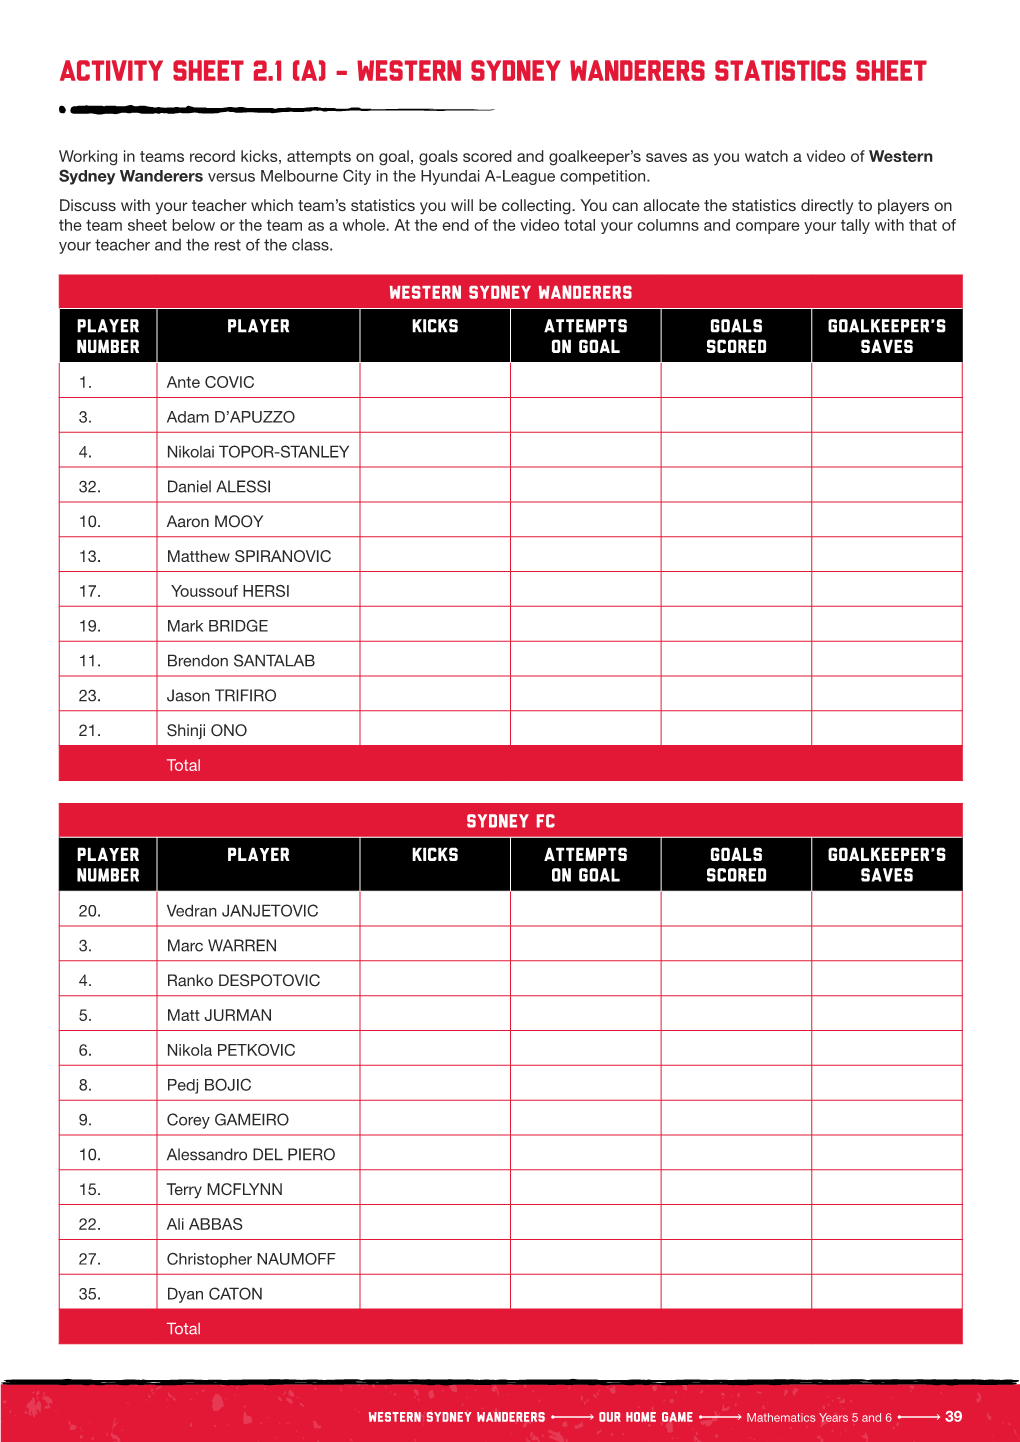 Activity Sheet 2.1 (A) - Western Sydney Wanderers Statistics Sheet